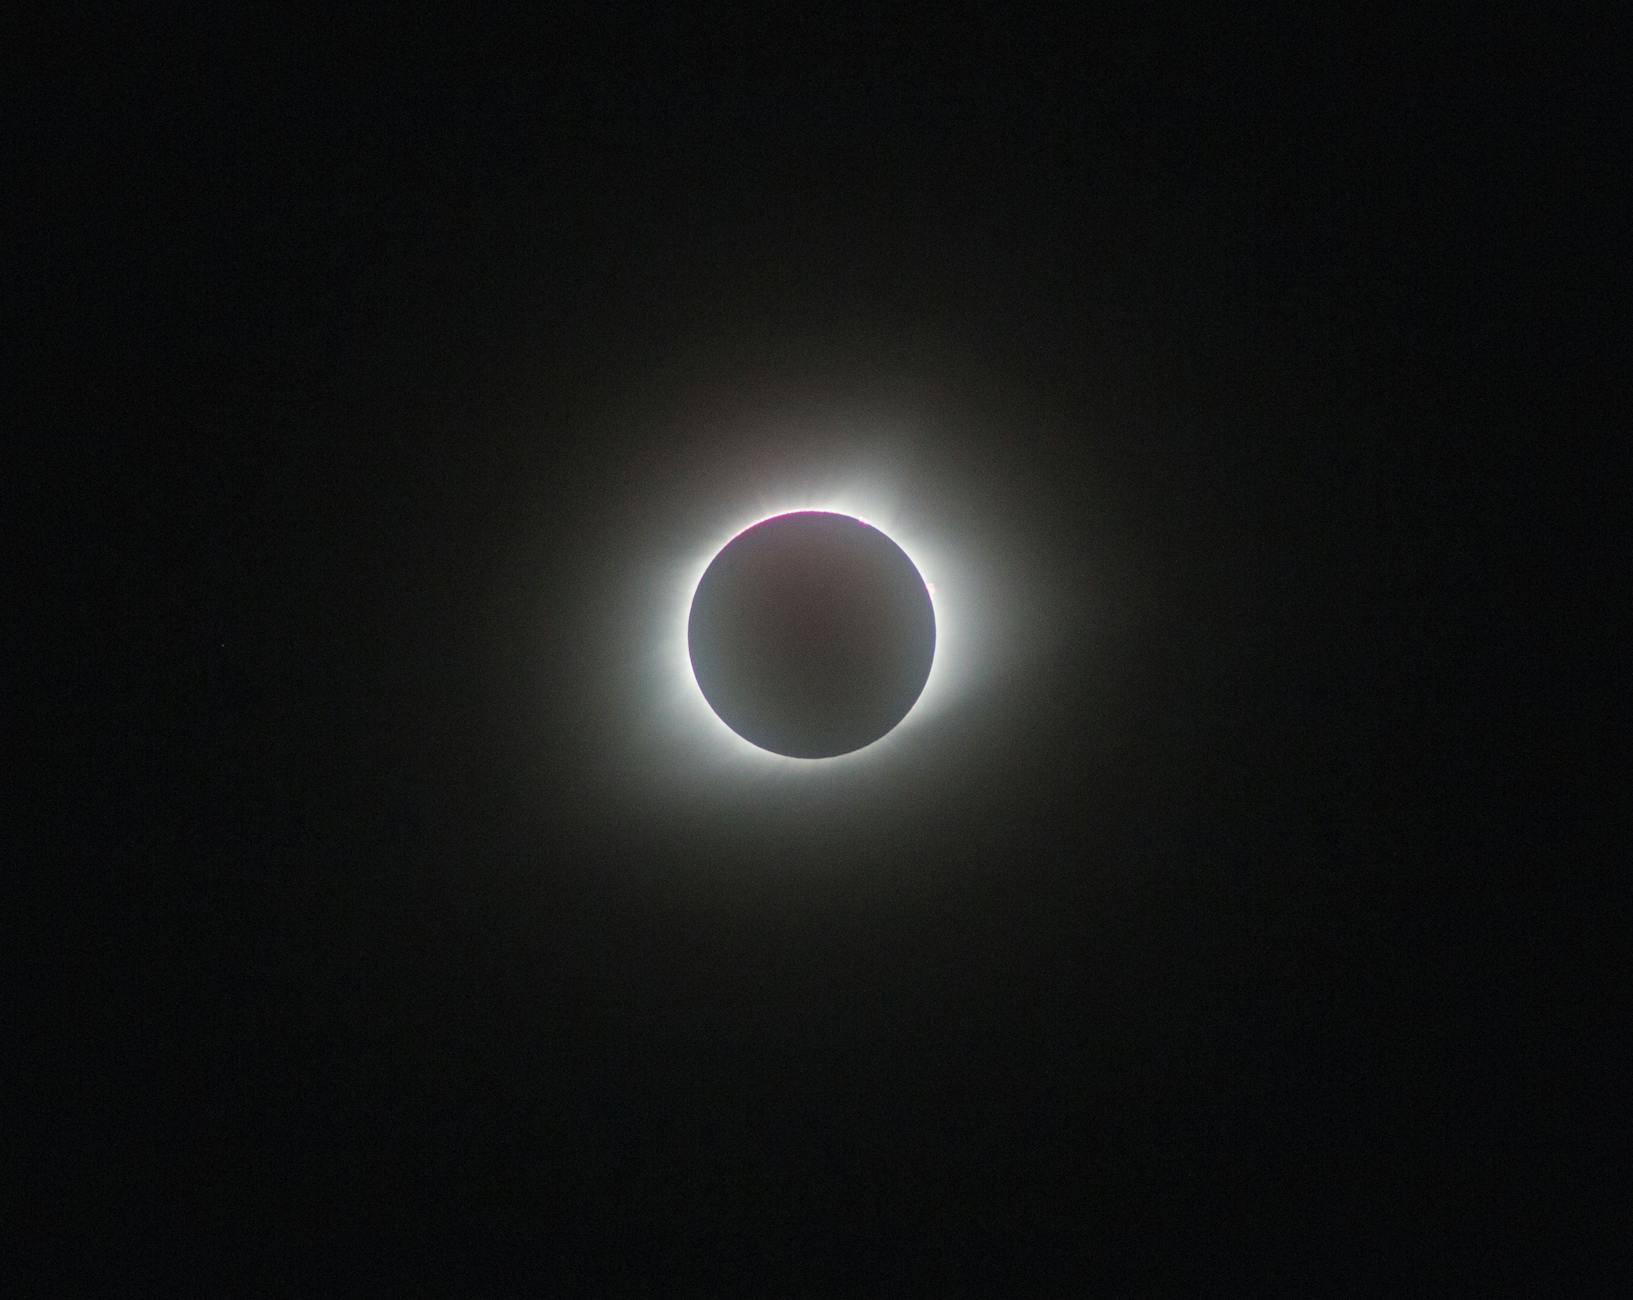 The corona around a total solar eclipse.